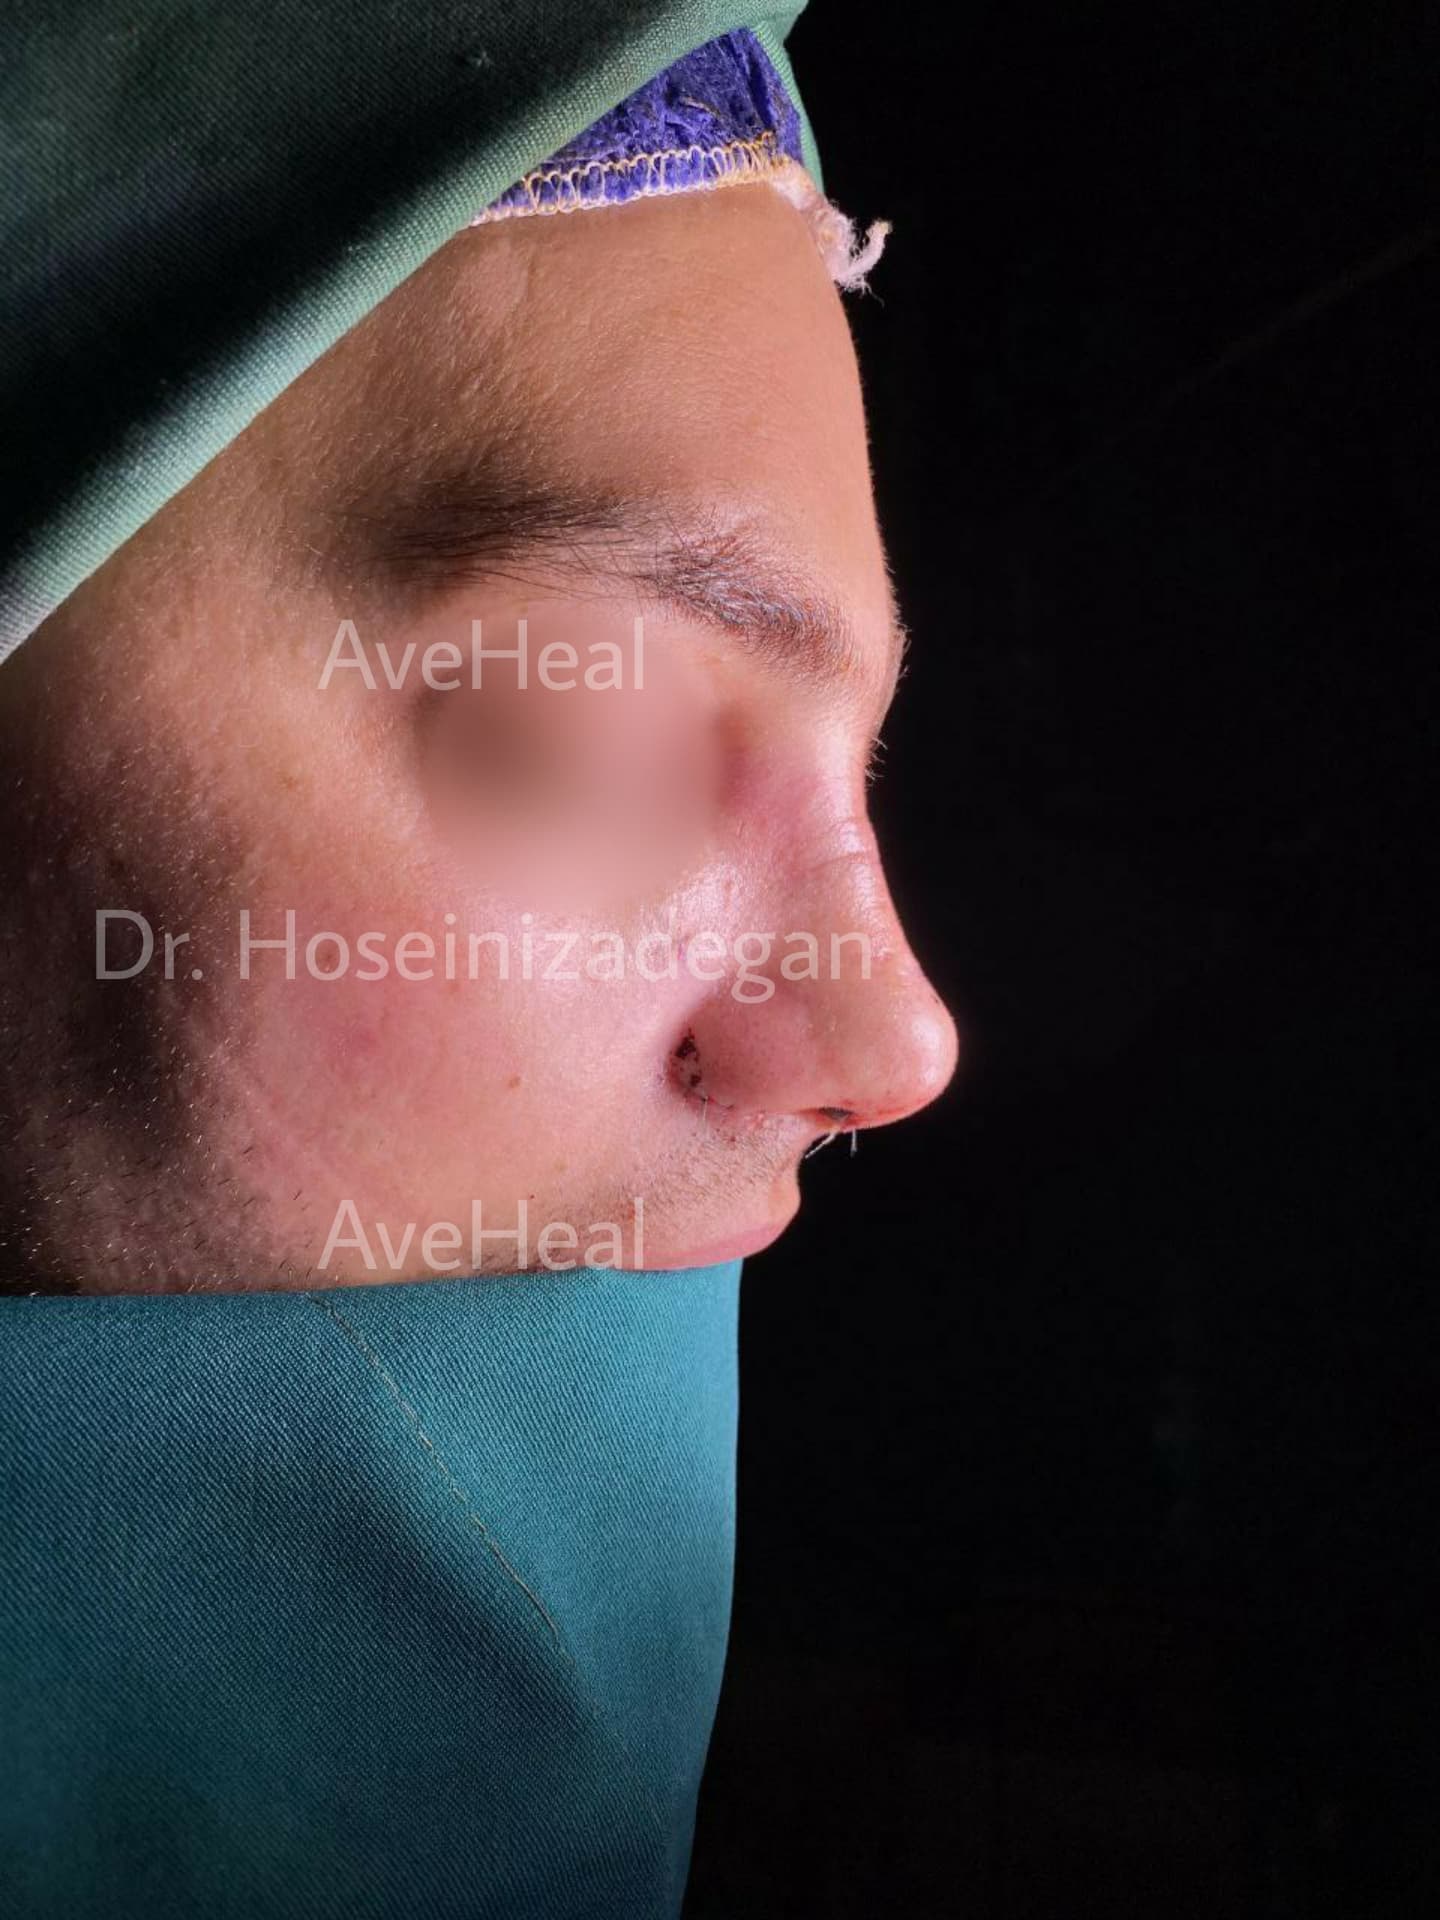 after-rhinoplasty-dr-fatemeh-hoseini-zadegan-shirazi